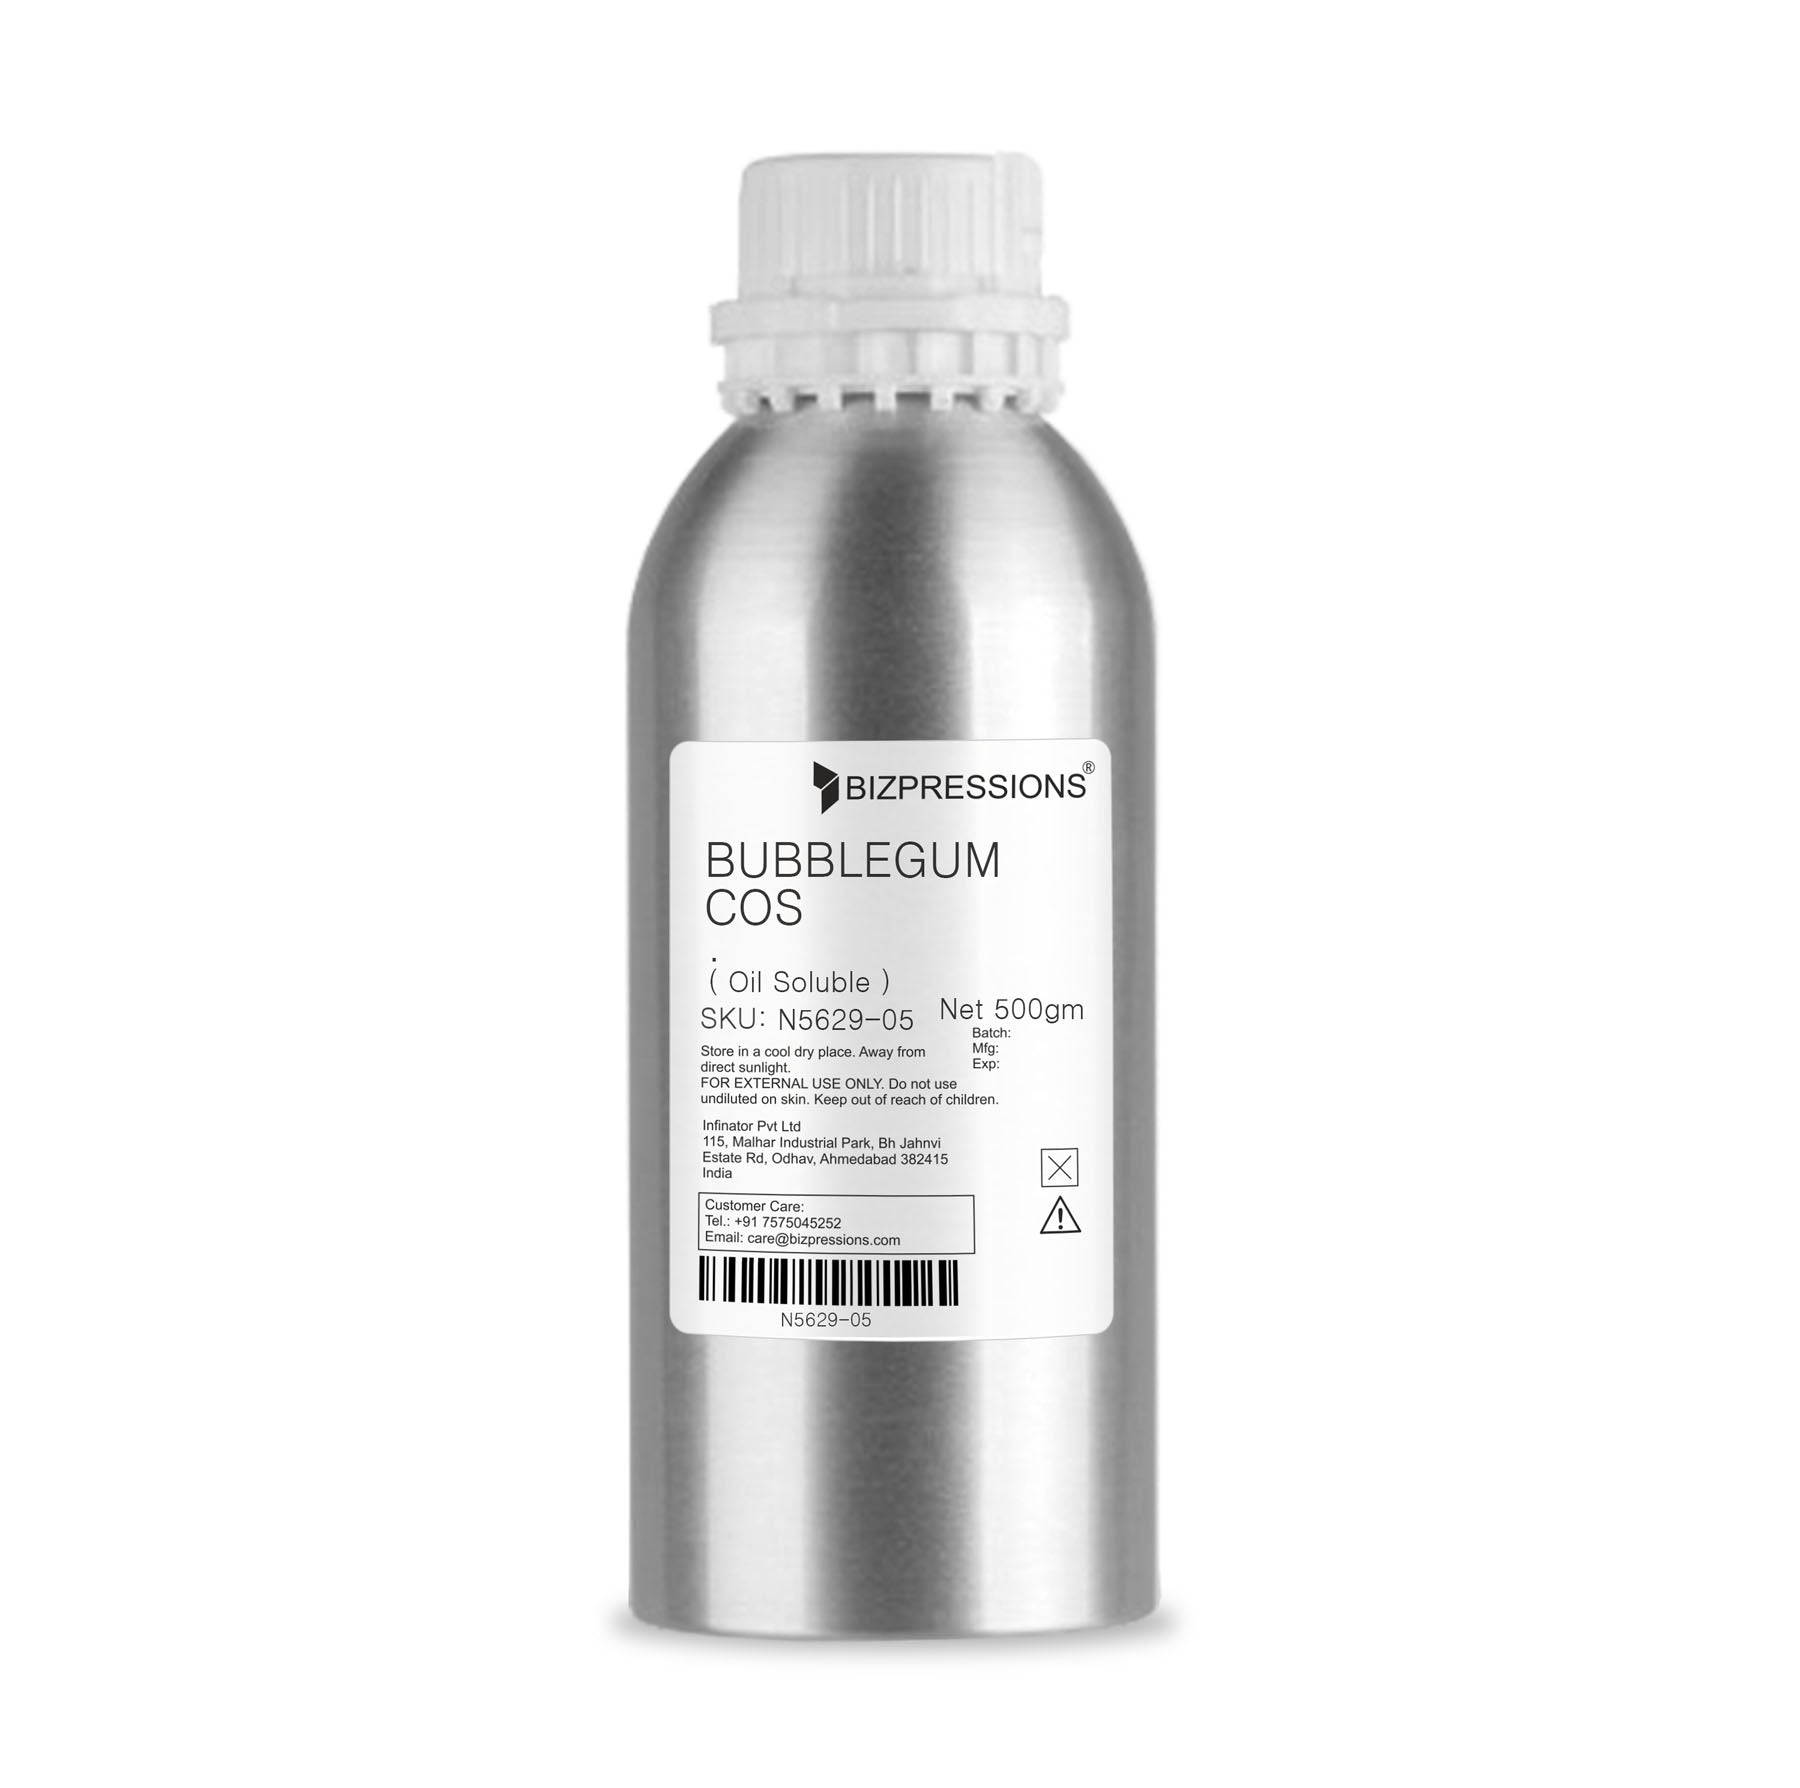 BUBBLEGUM COS - Fragrance ( Oil Soluble ) - 500 gm